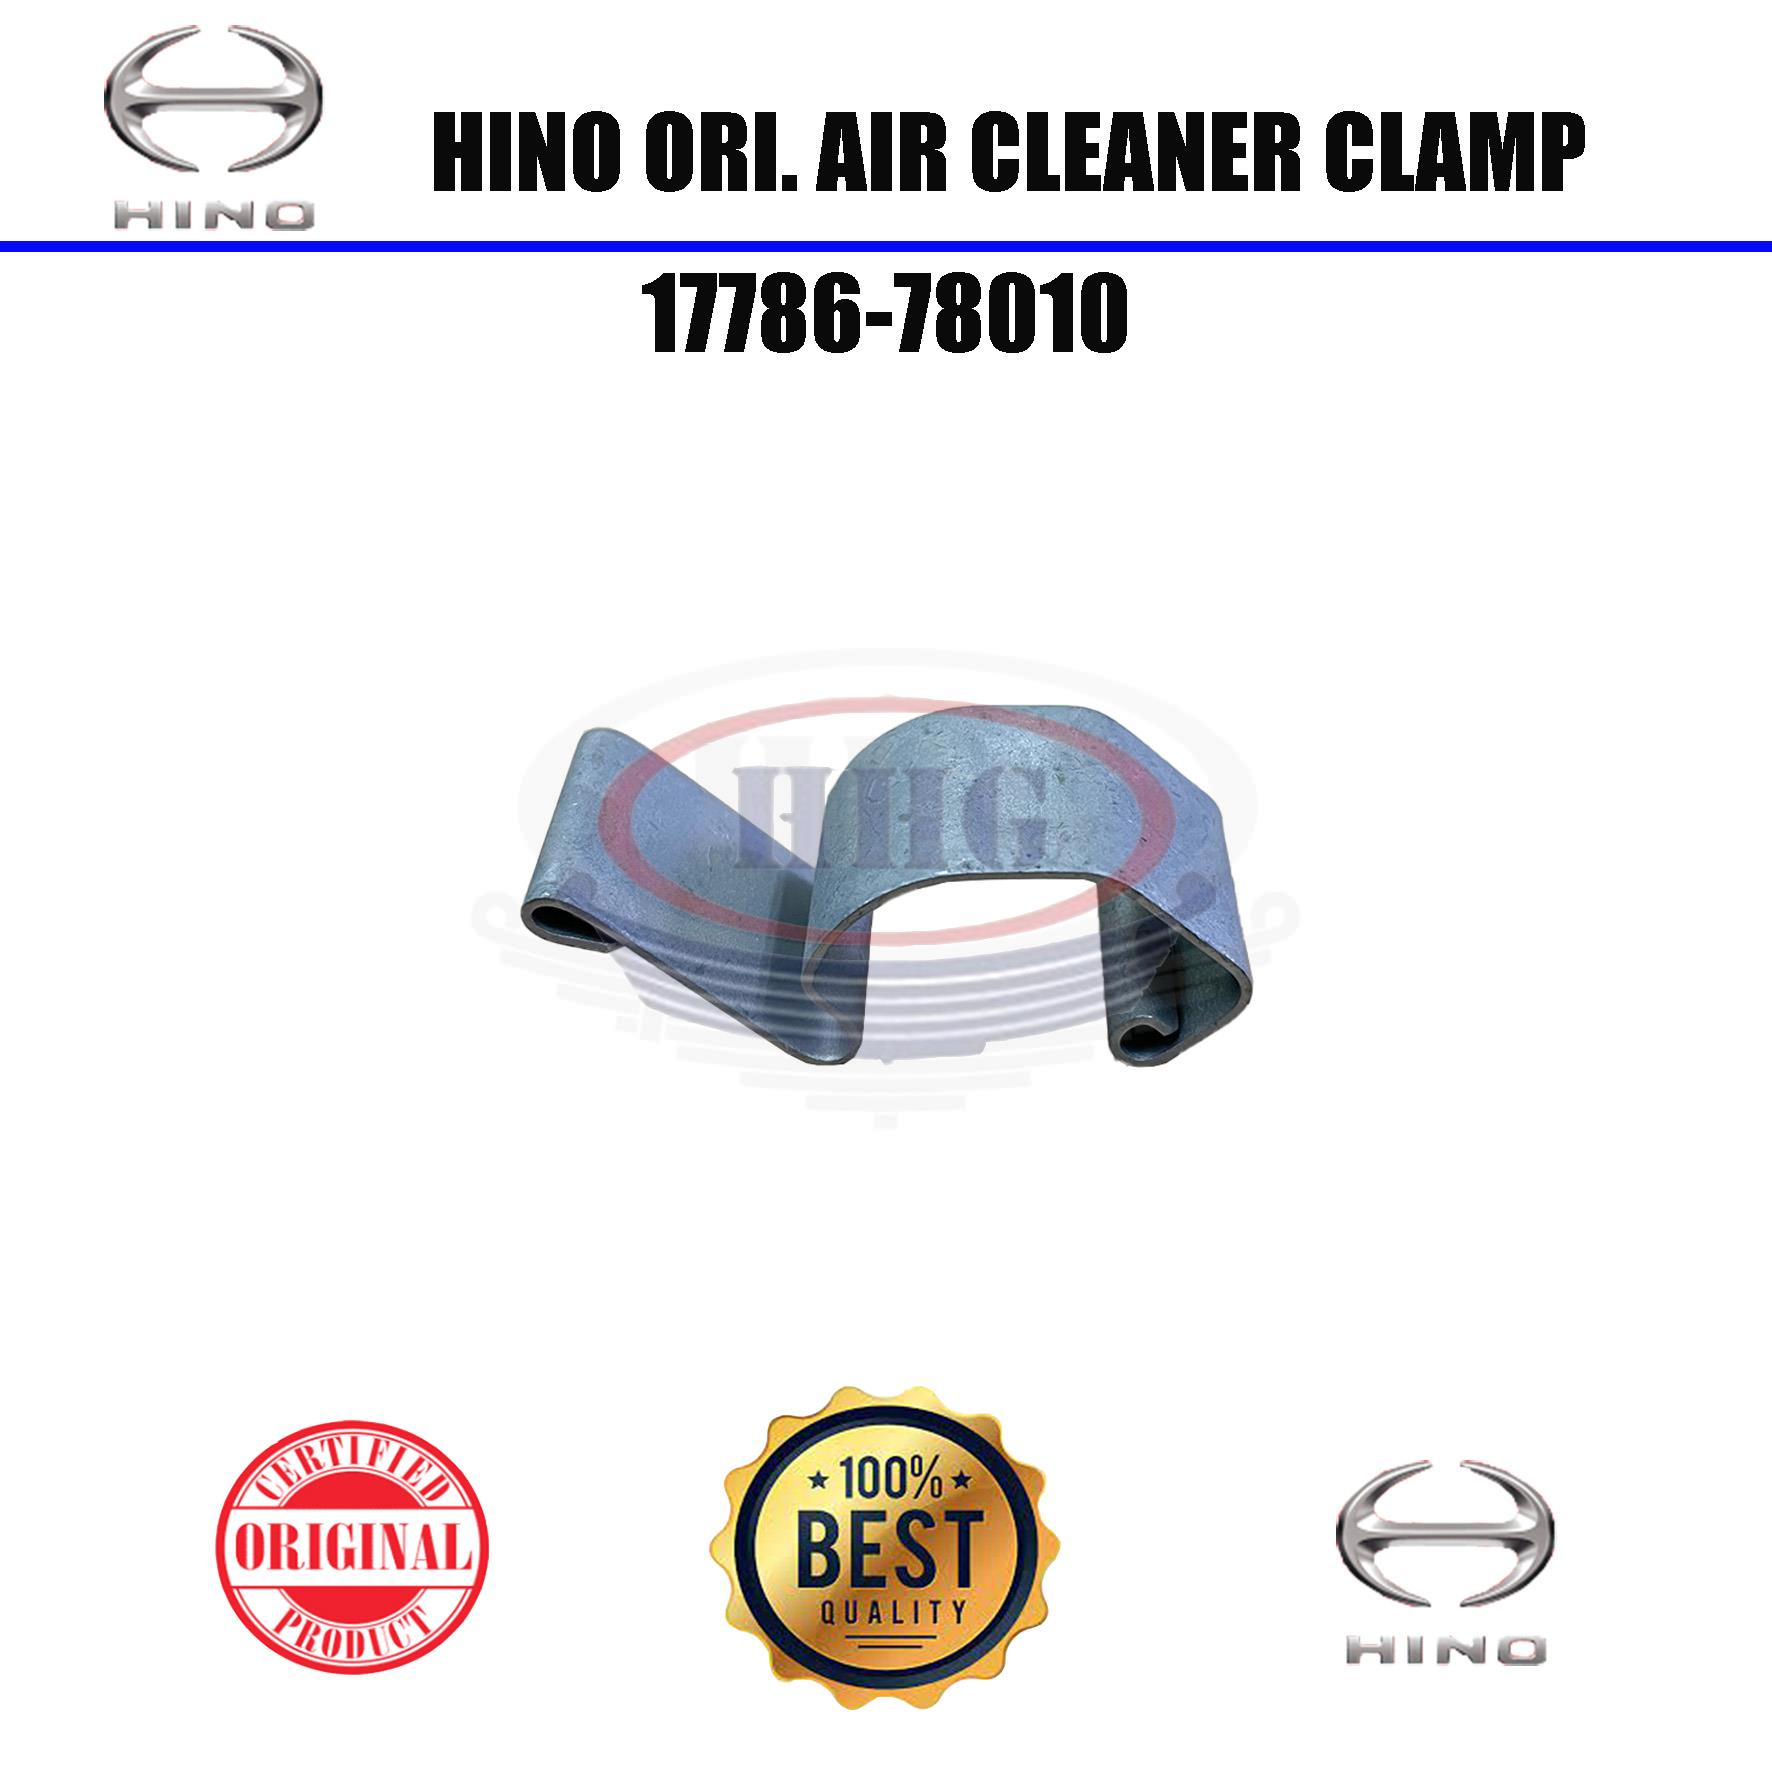 Hino Original Dutro WU410 Air Cleaner Clamp (17786-78010)